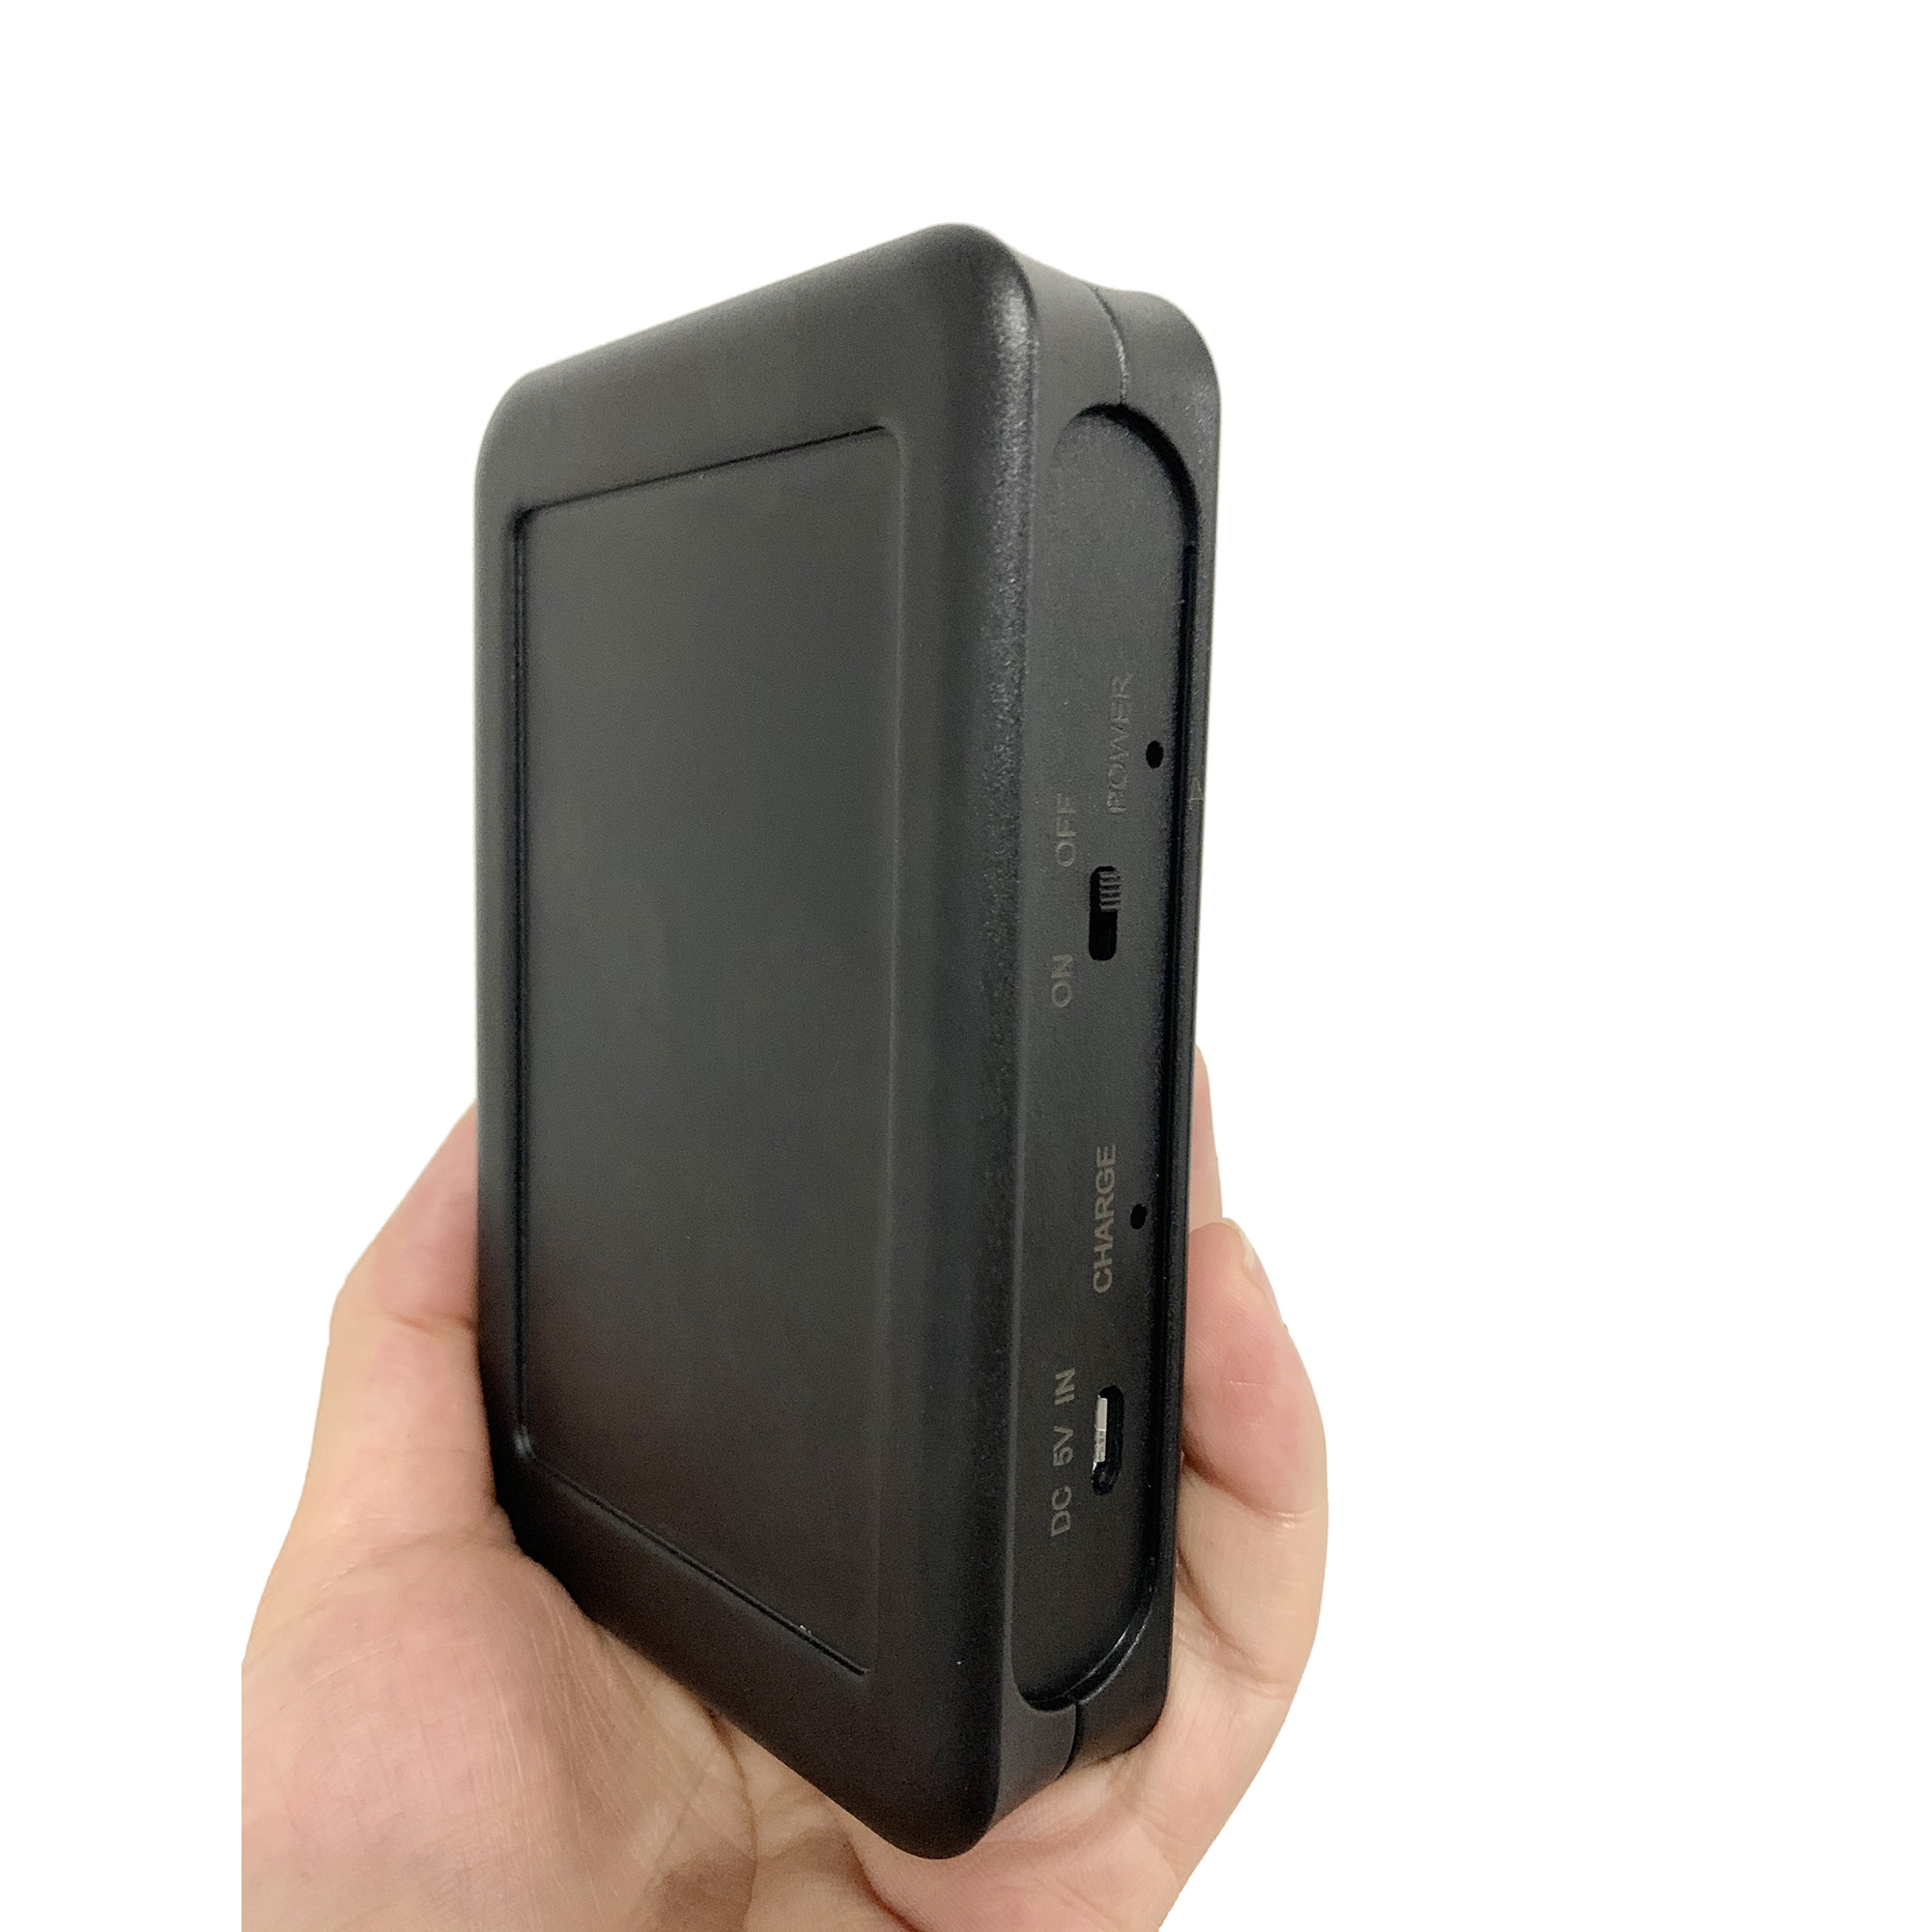 jammer legal team website - Mini Hidden Pocket 8 Bands Portable Cell Phone Jammers For 3G 4G CDMA GSM